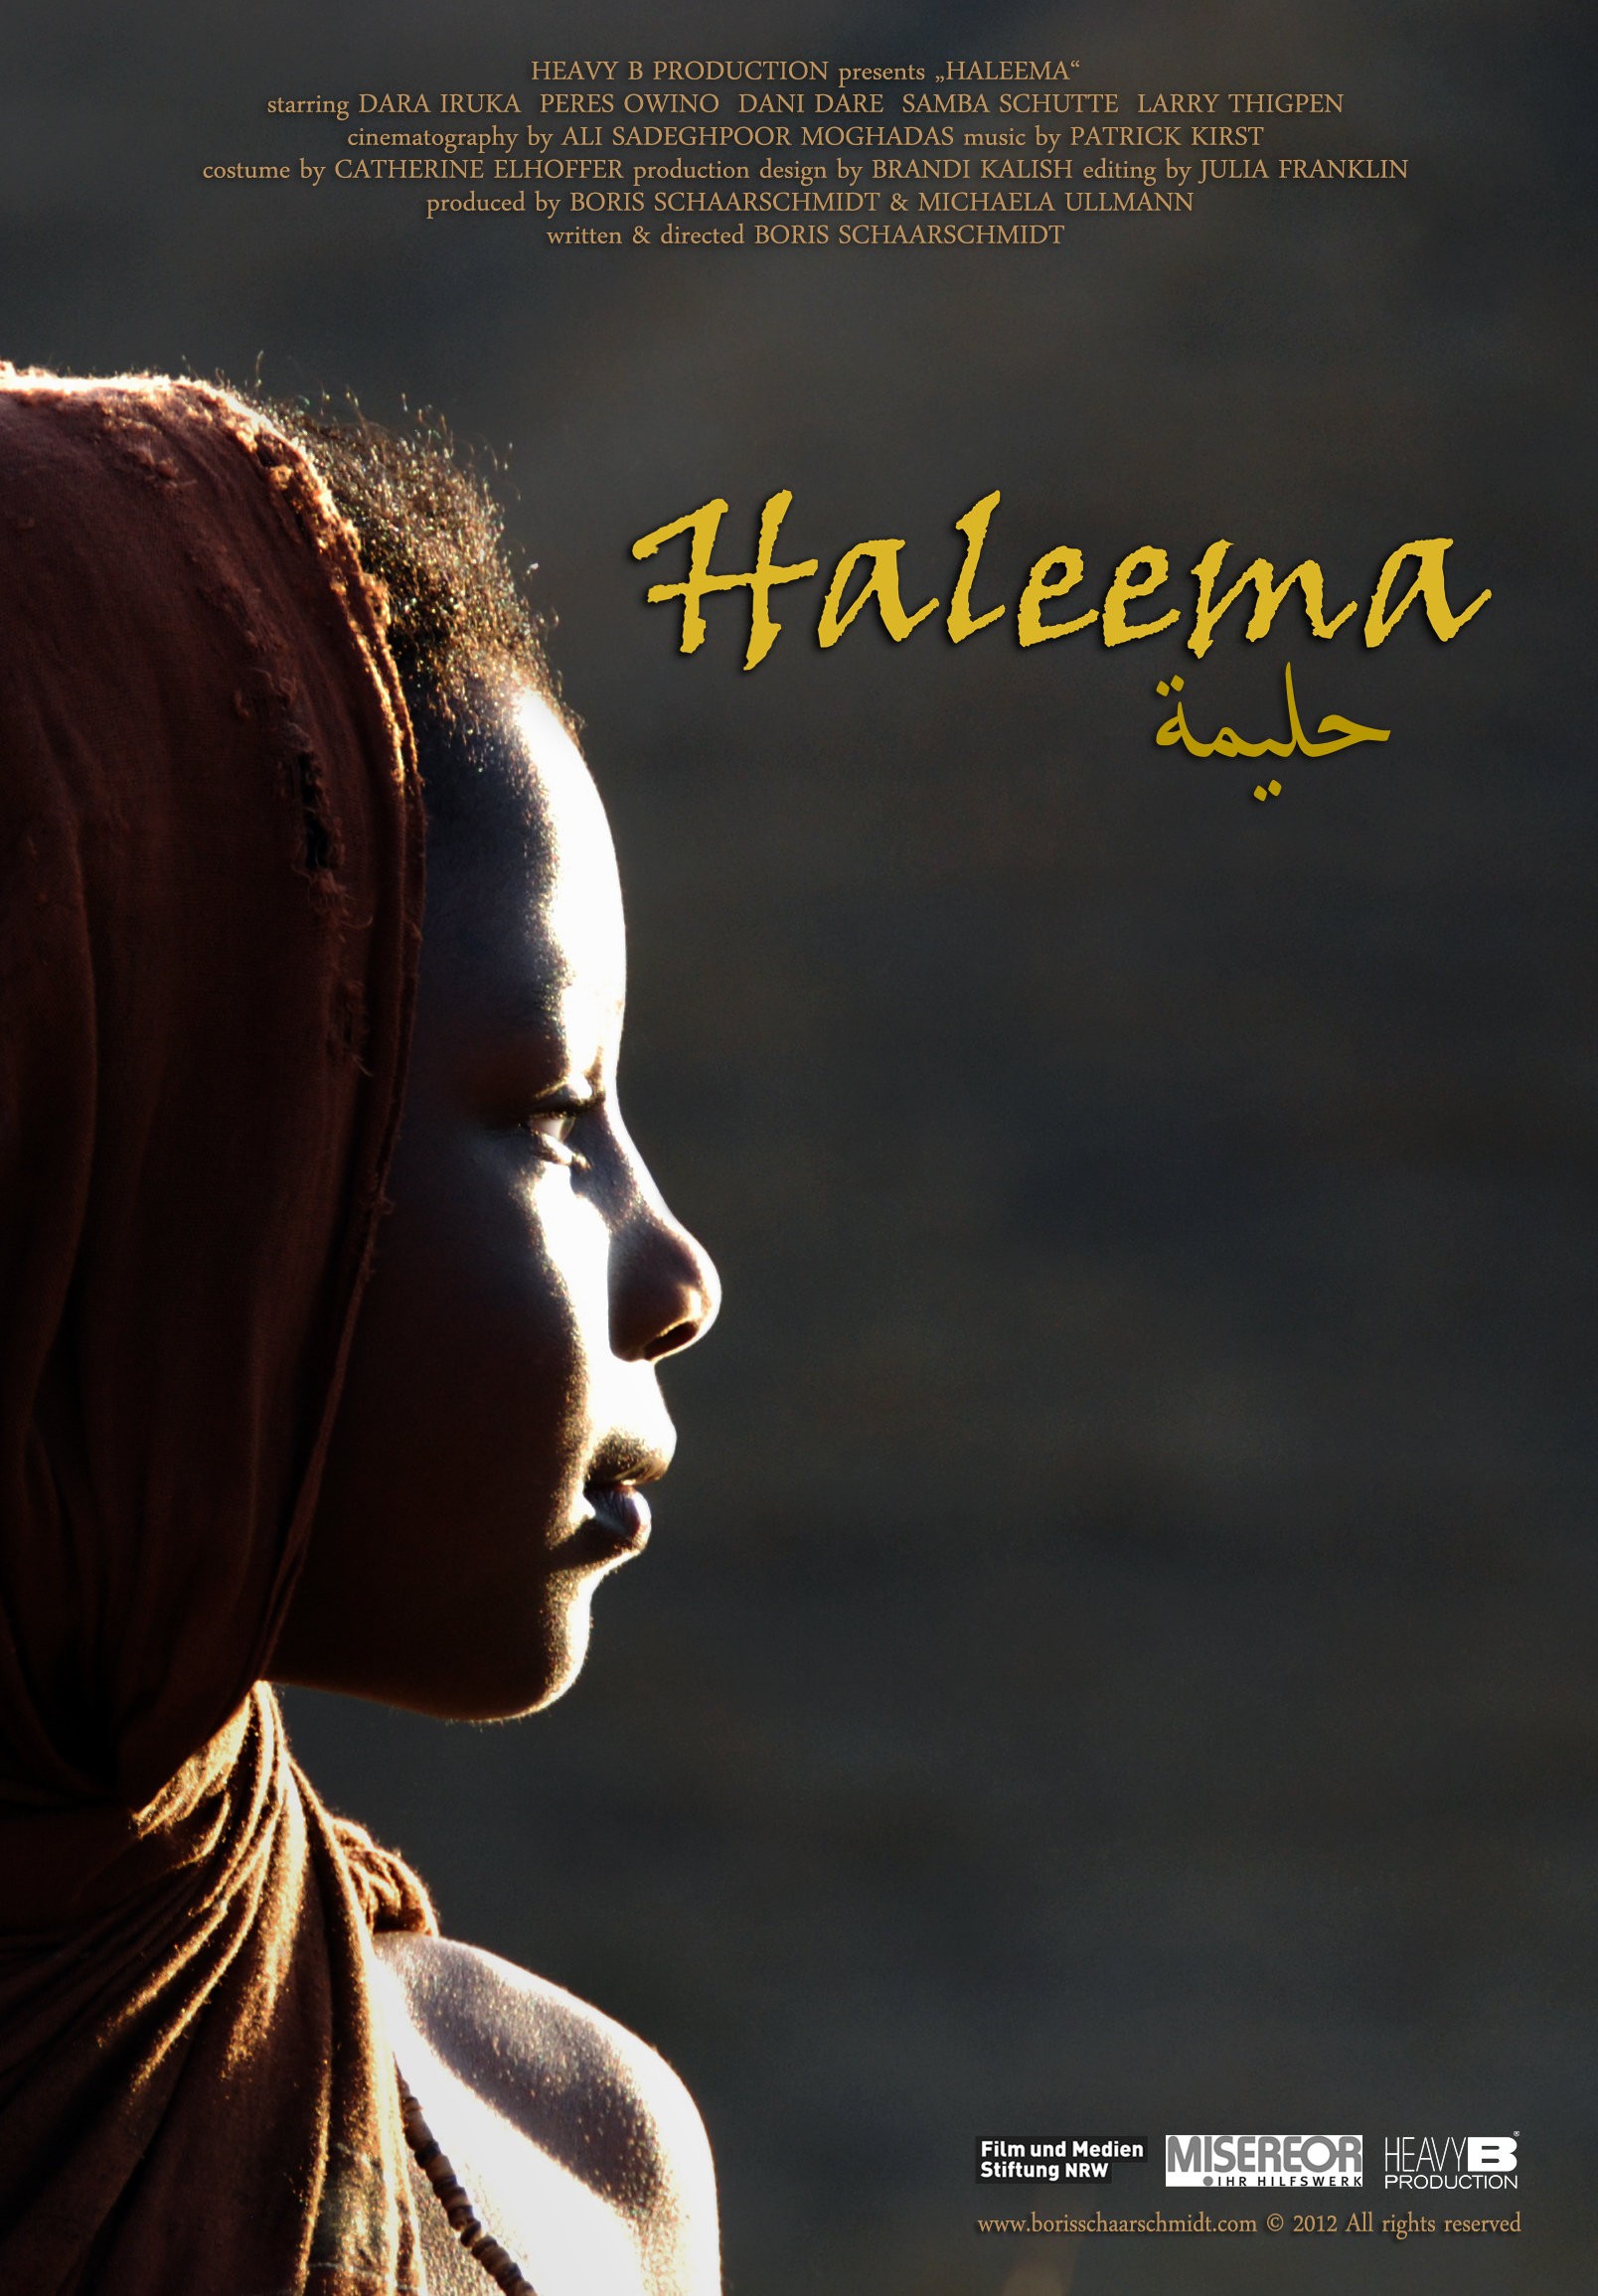 Mega Sized Movie Poster Image for Haleema